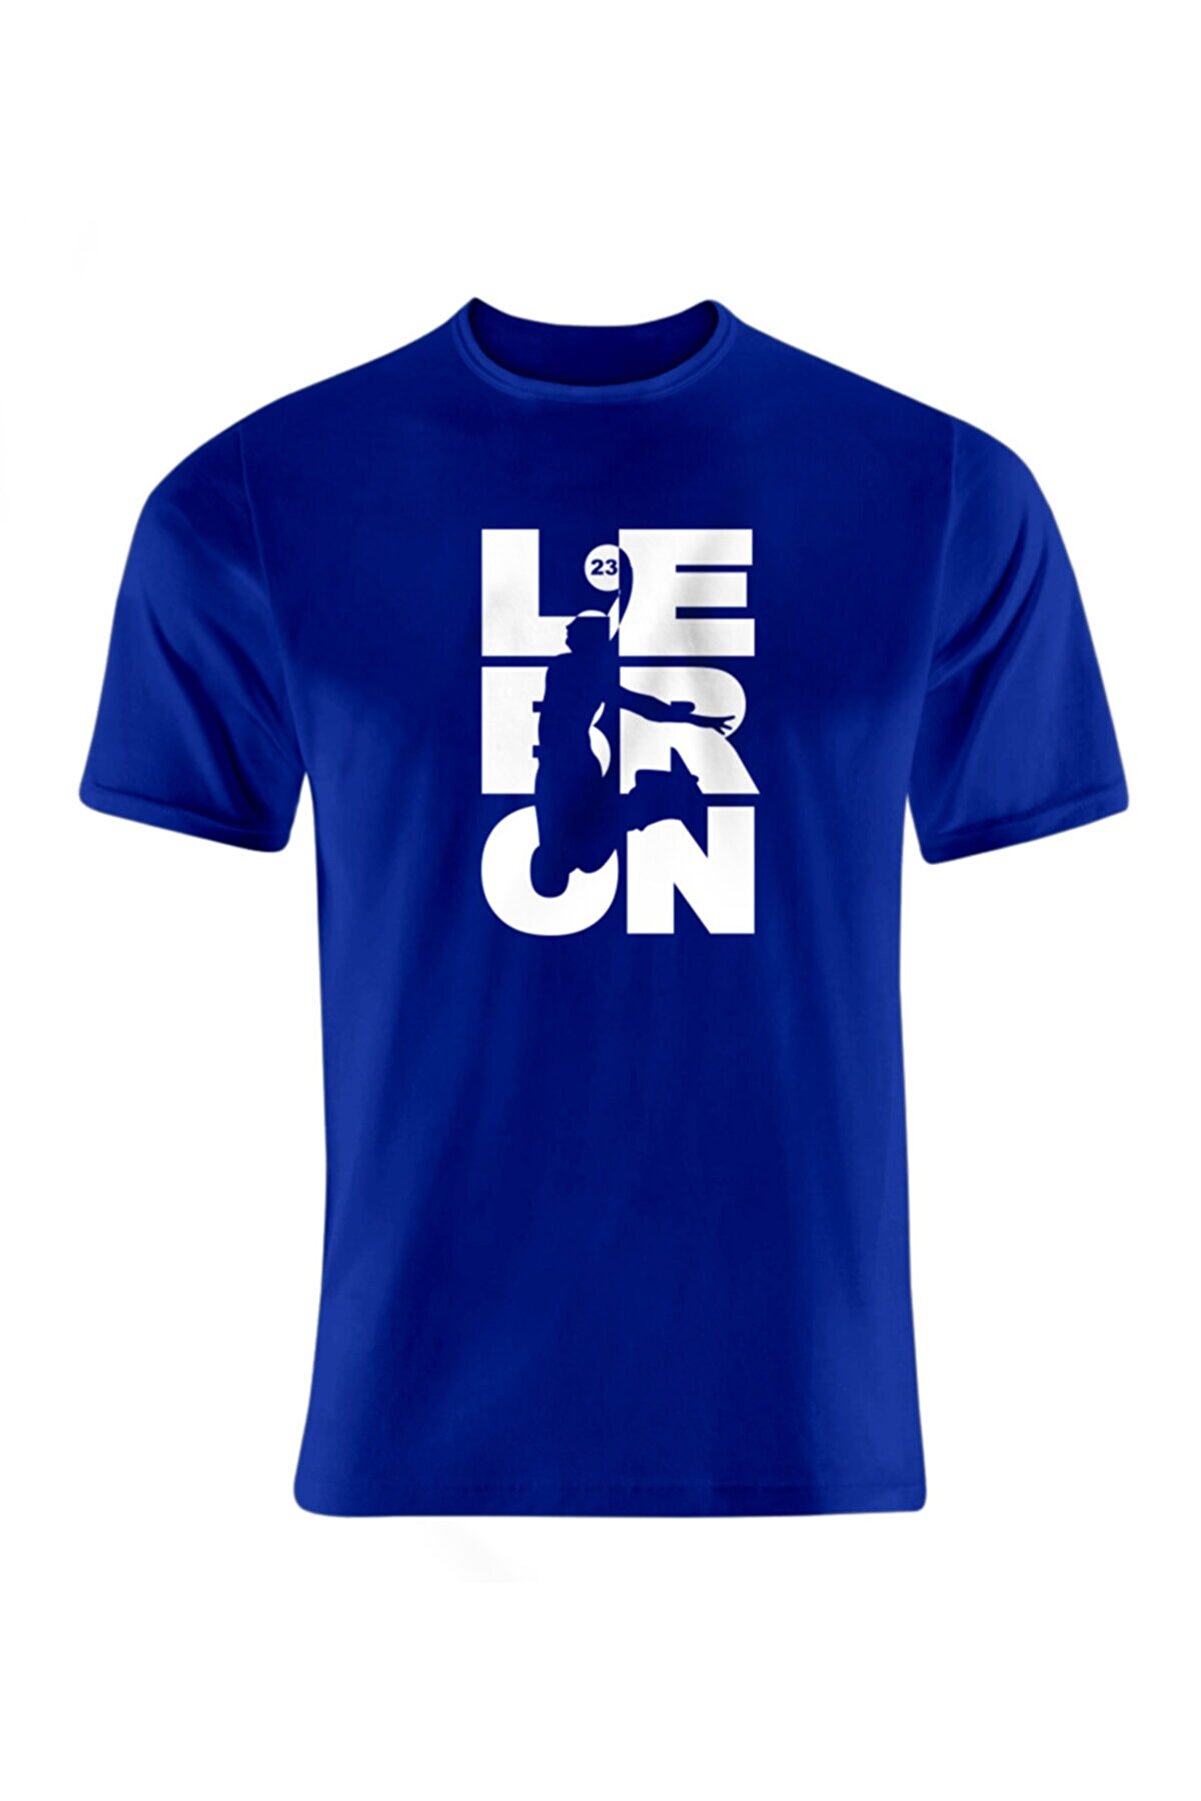 Usateamfans Unisex Mavi Lebron James Baskılı T-shirt